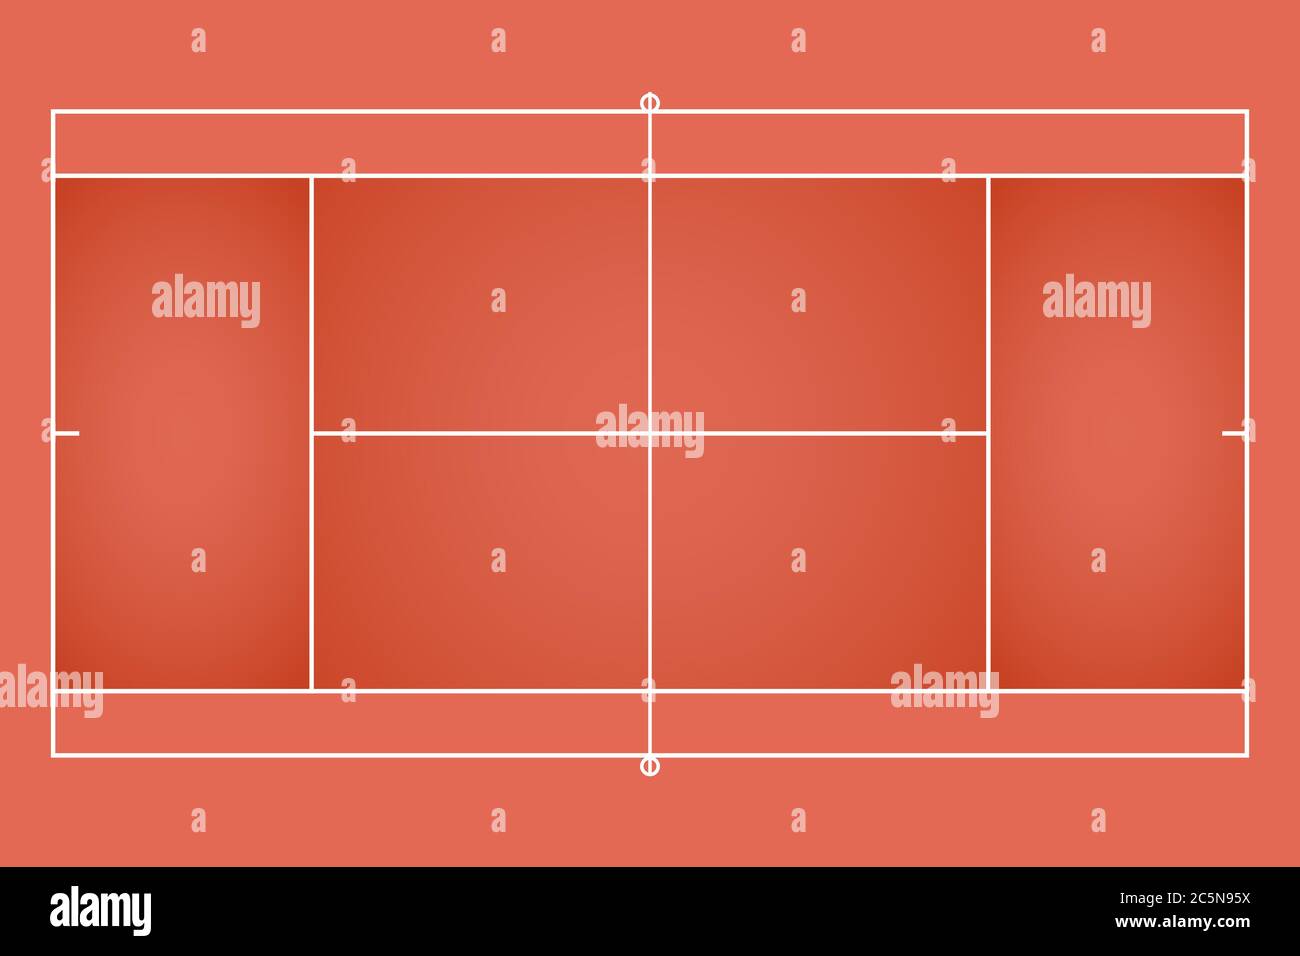 Tennis court background vector illustration pattern template Stock Vector